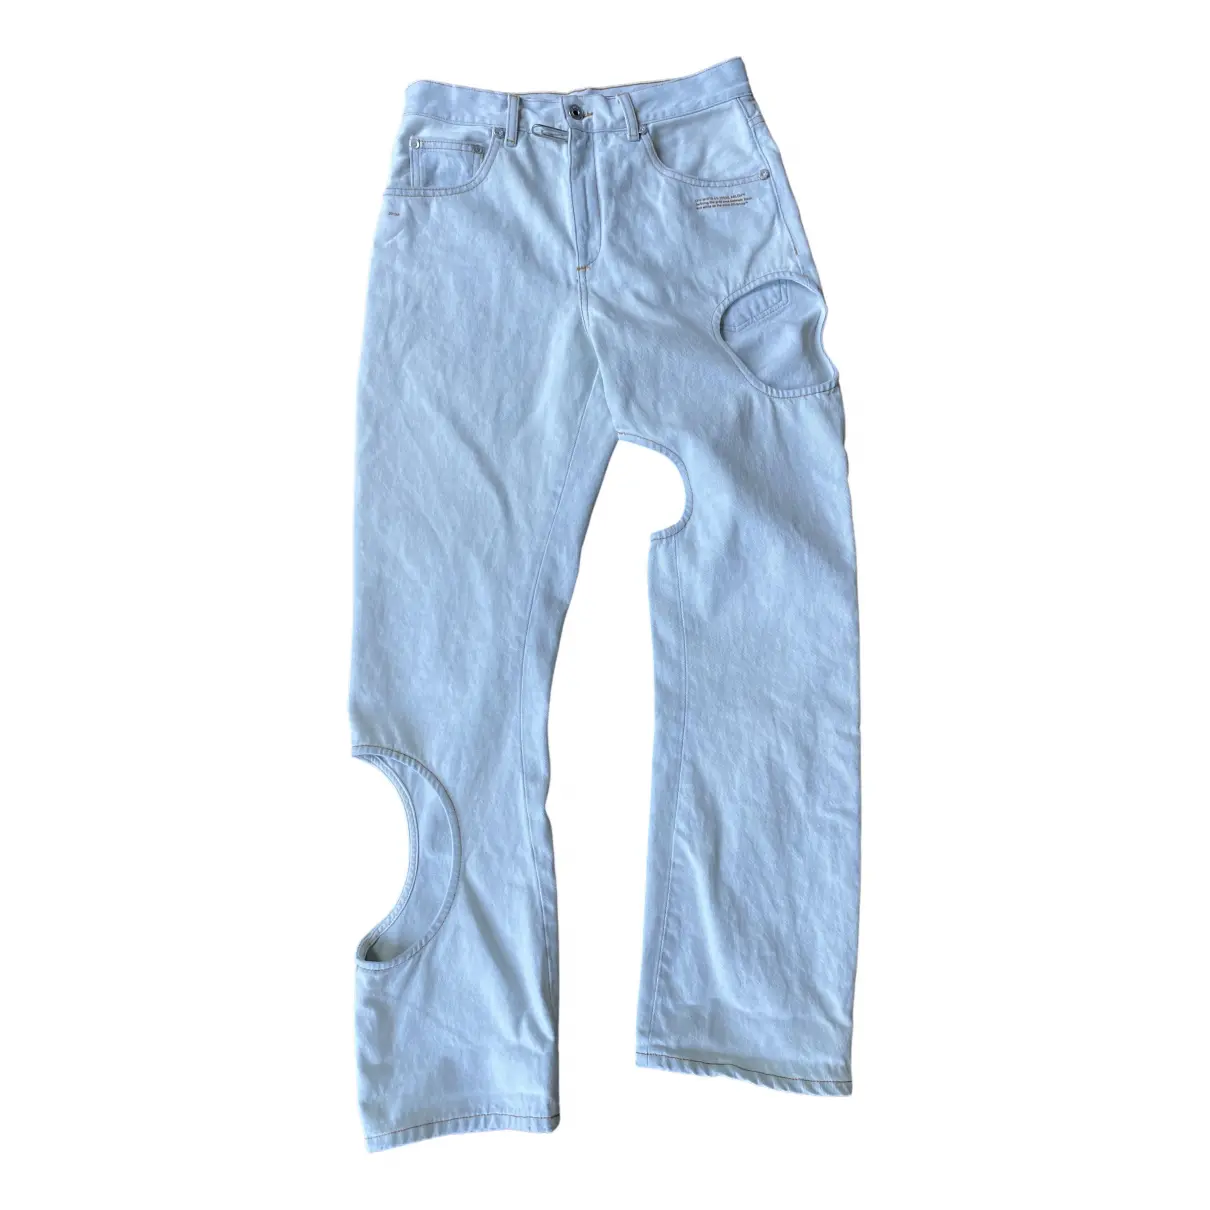 Blue Cotton Jeans Off-White